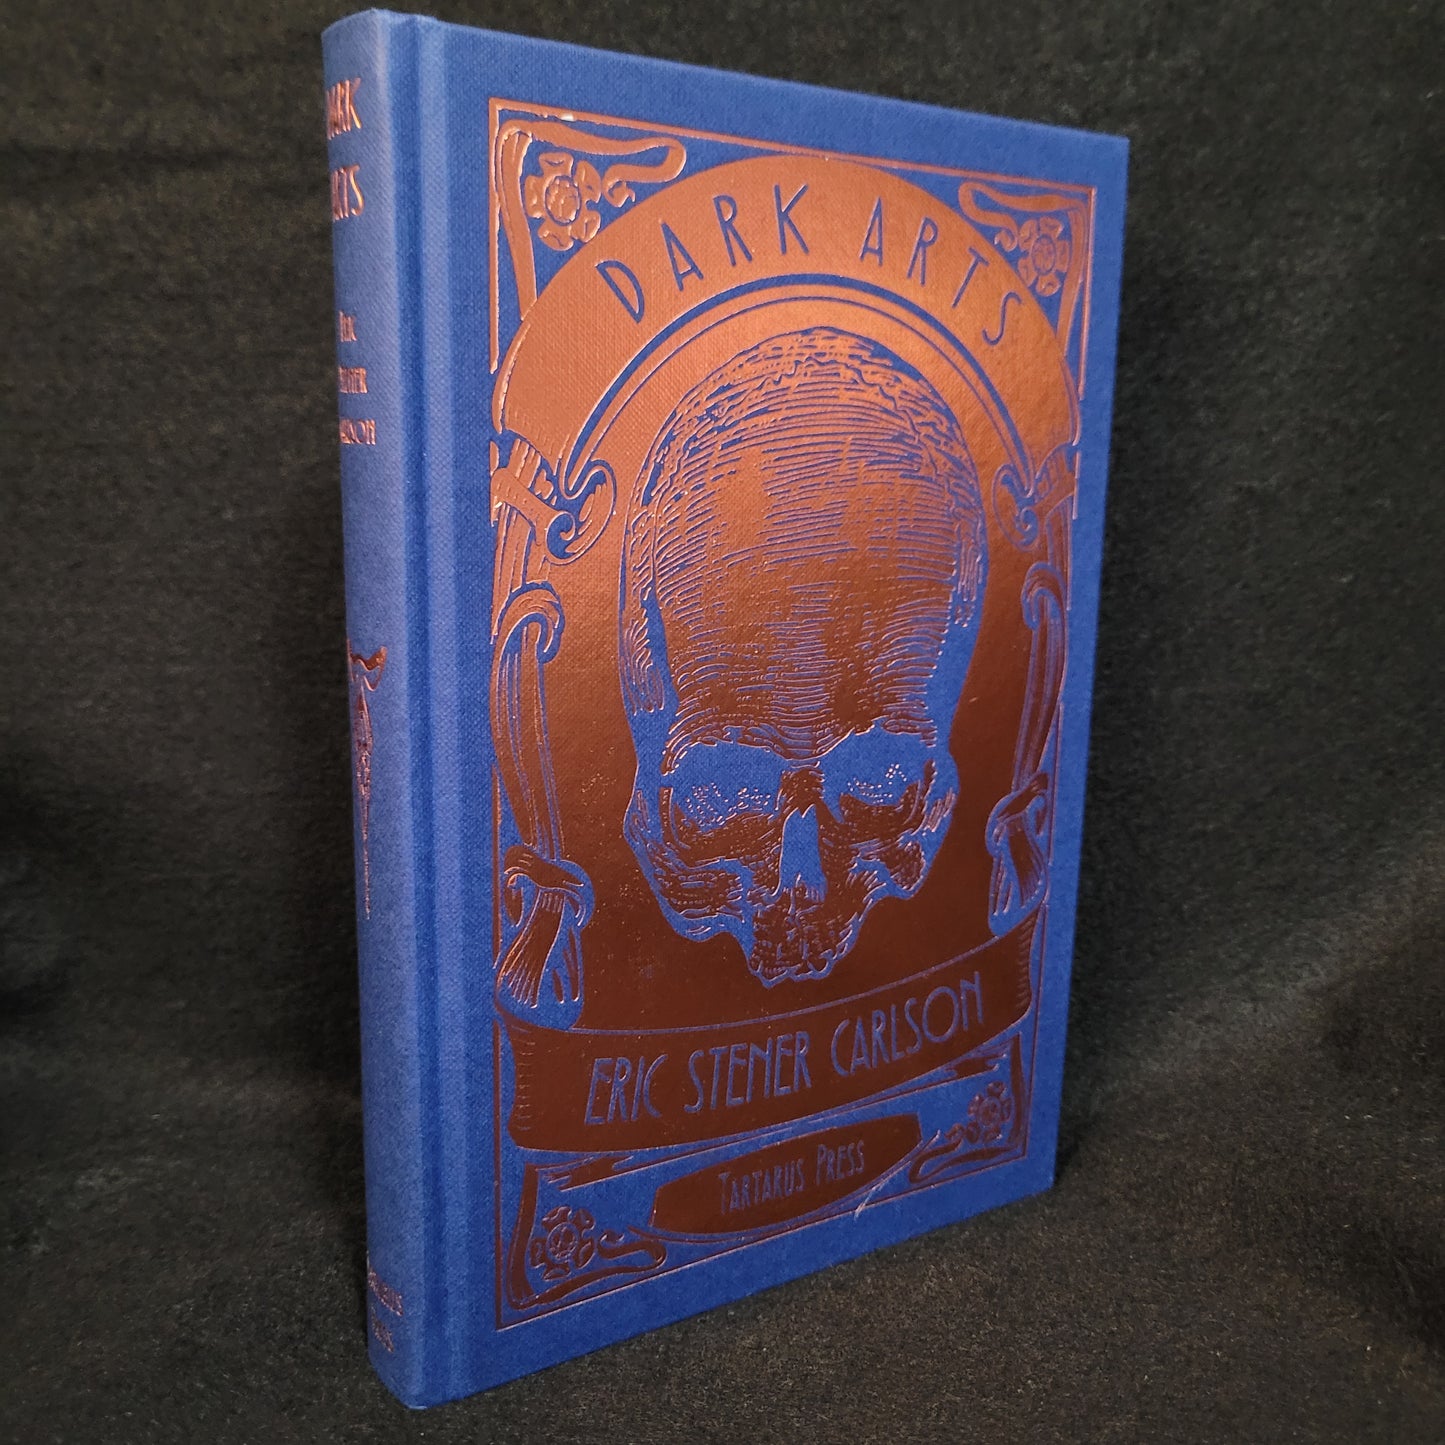 Dark Arts by Eric Stener Carlson (Tartarus Press, 2022) Limited Edition Hardcover